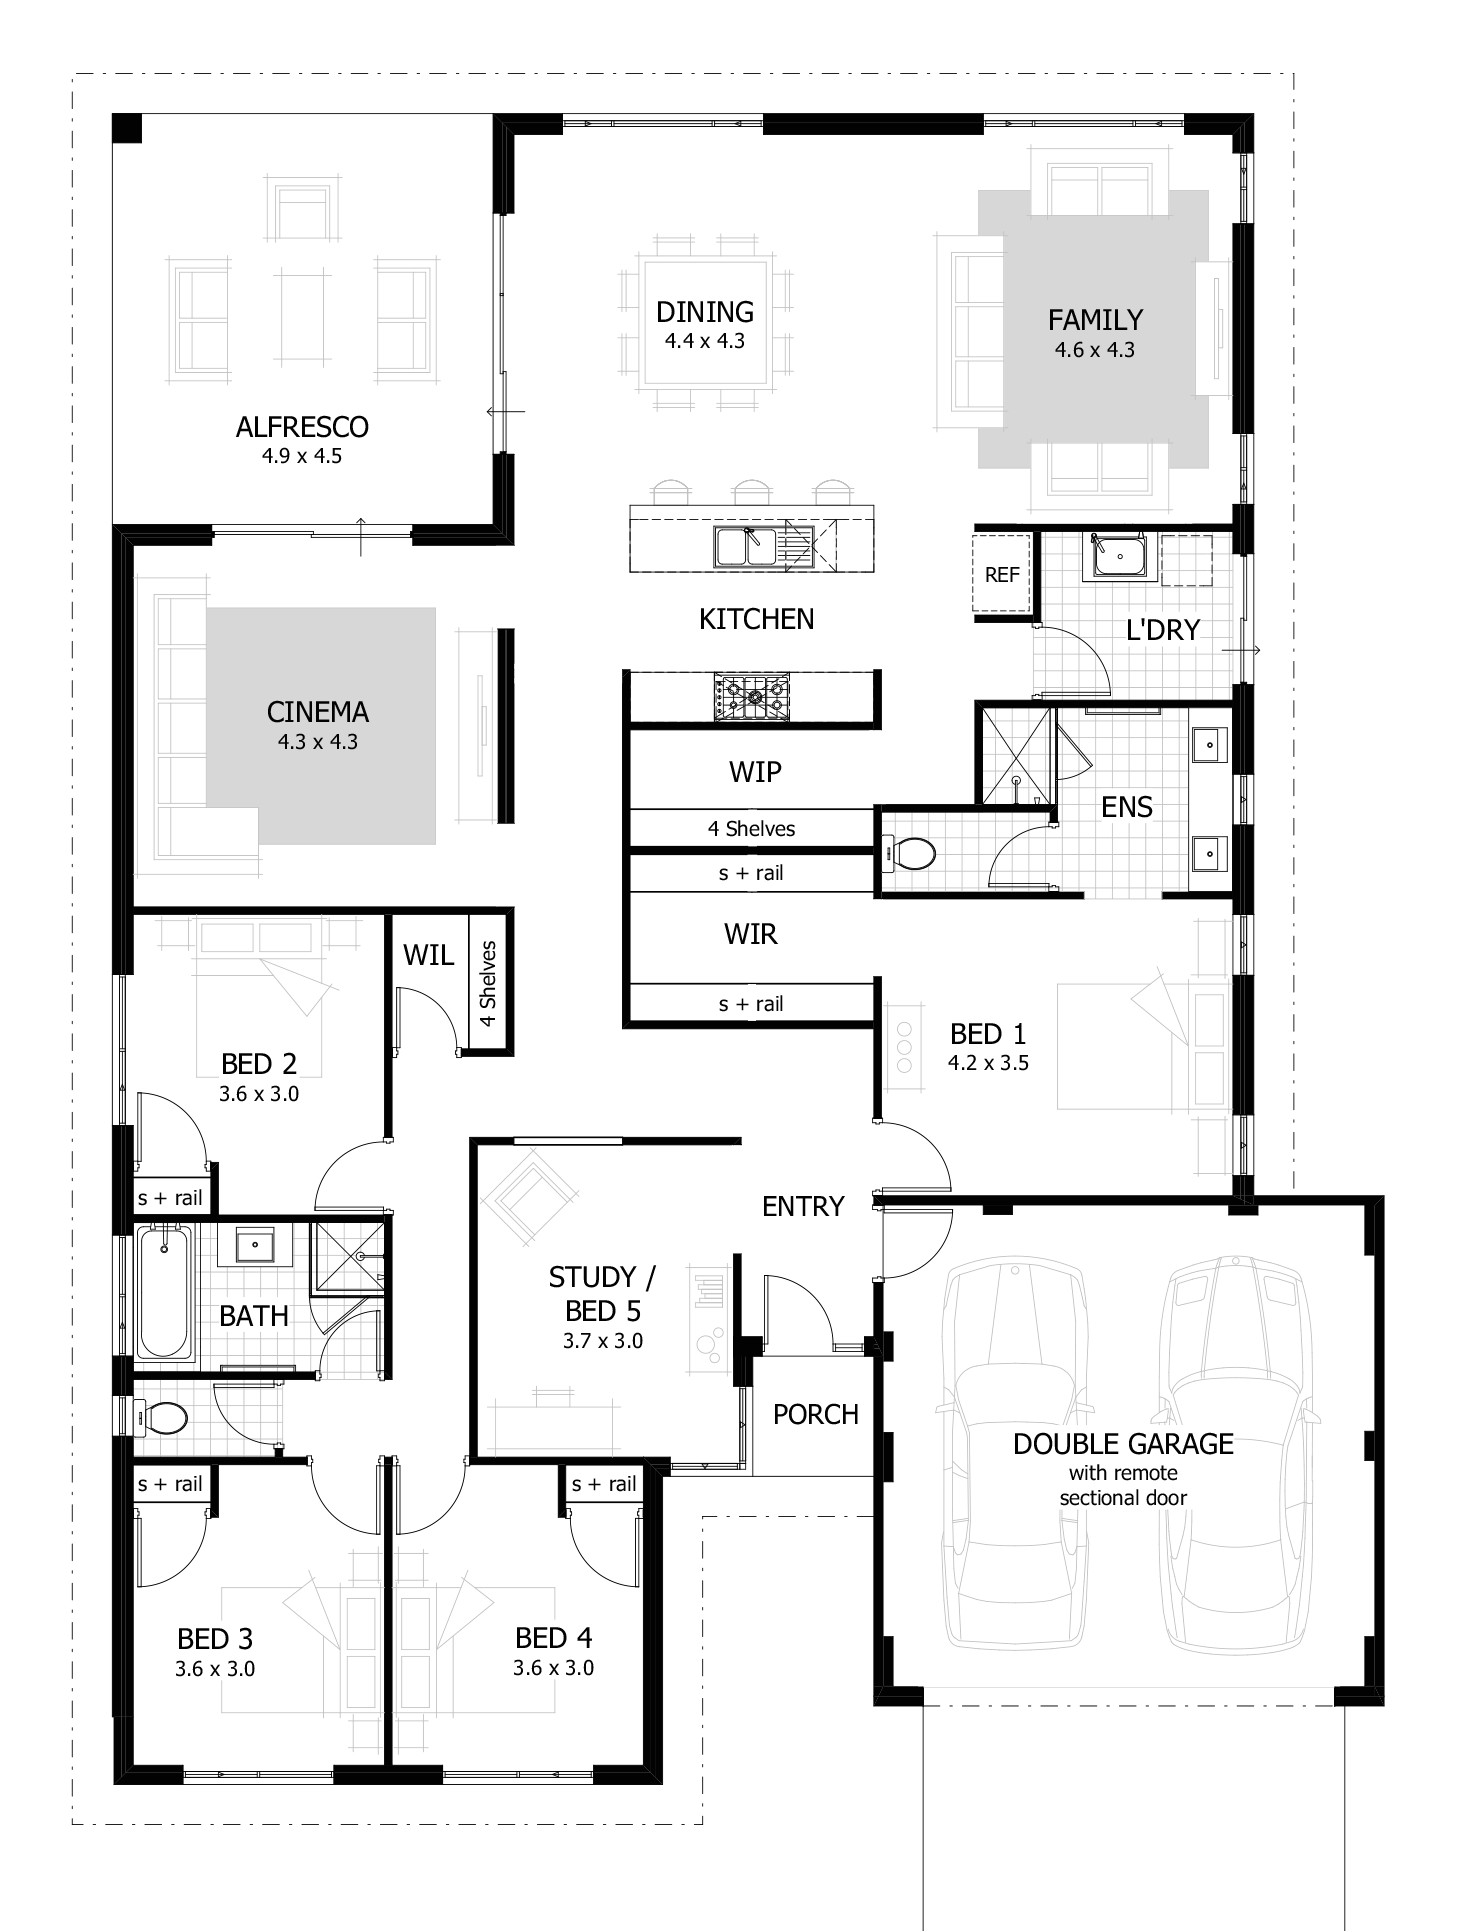 4 bedroom home designs plans